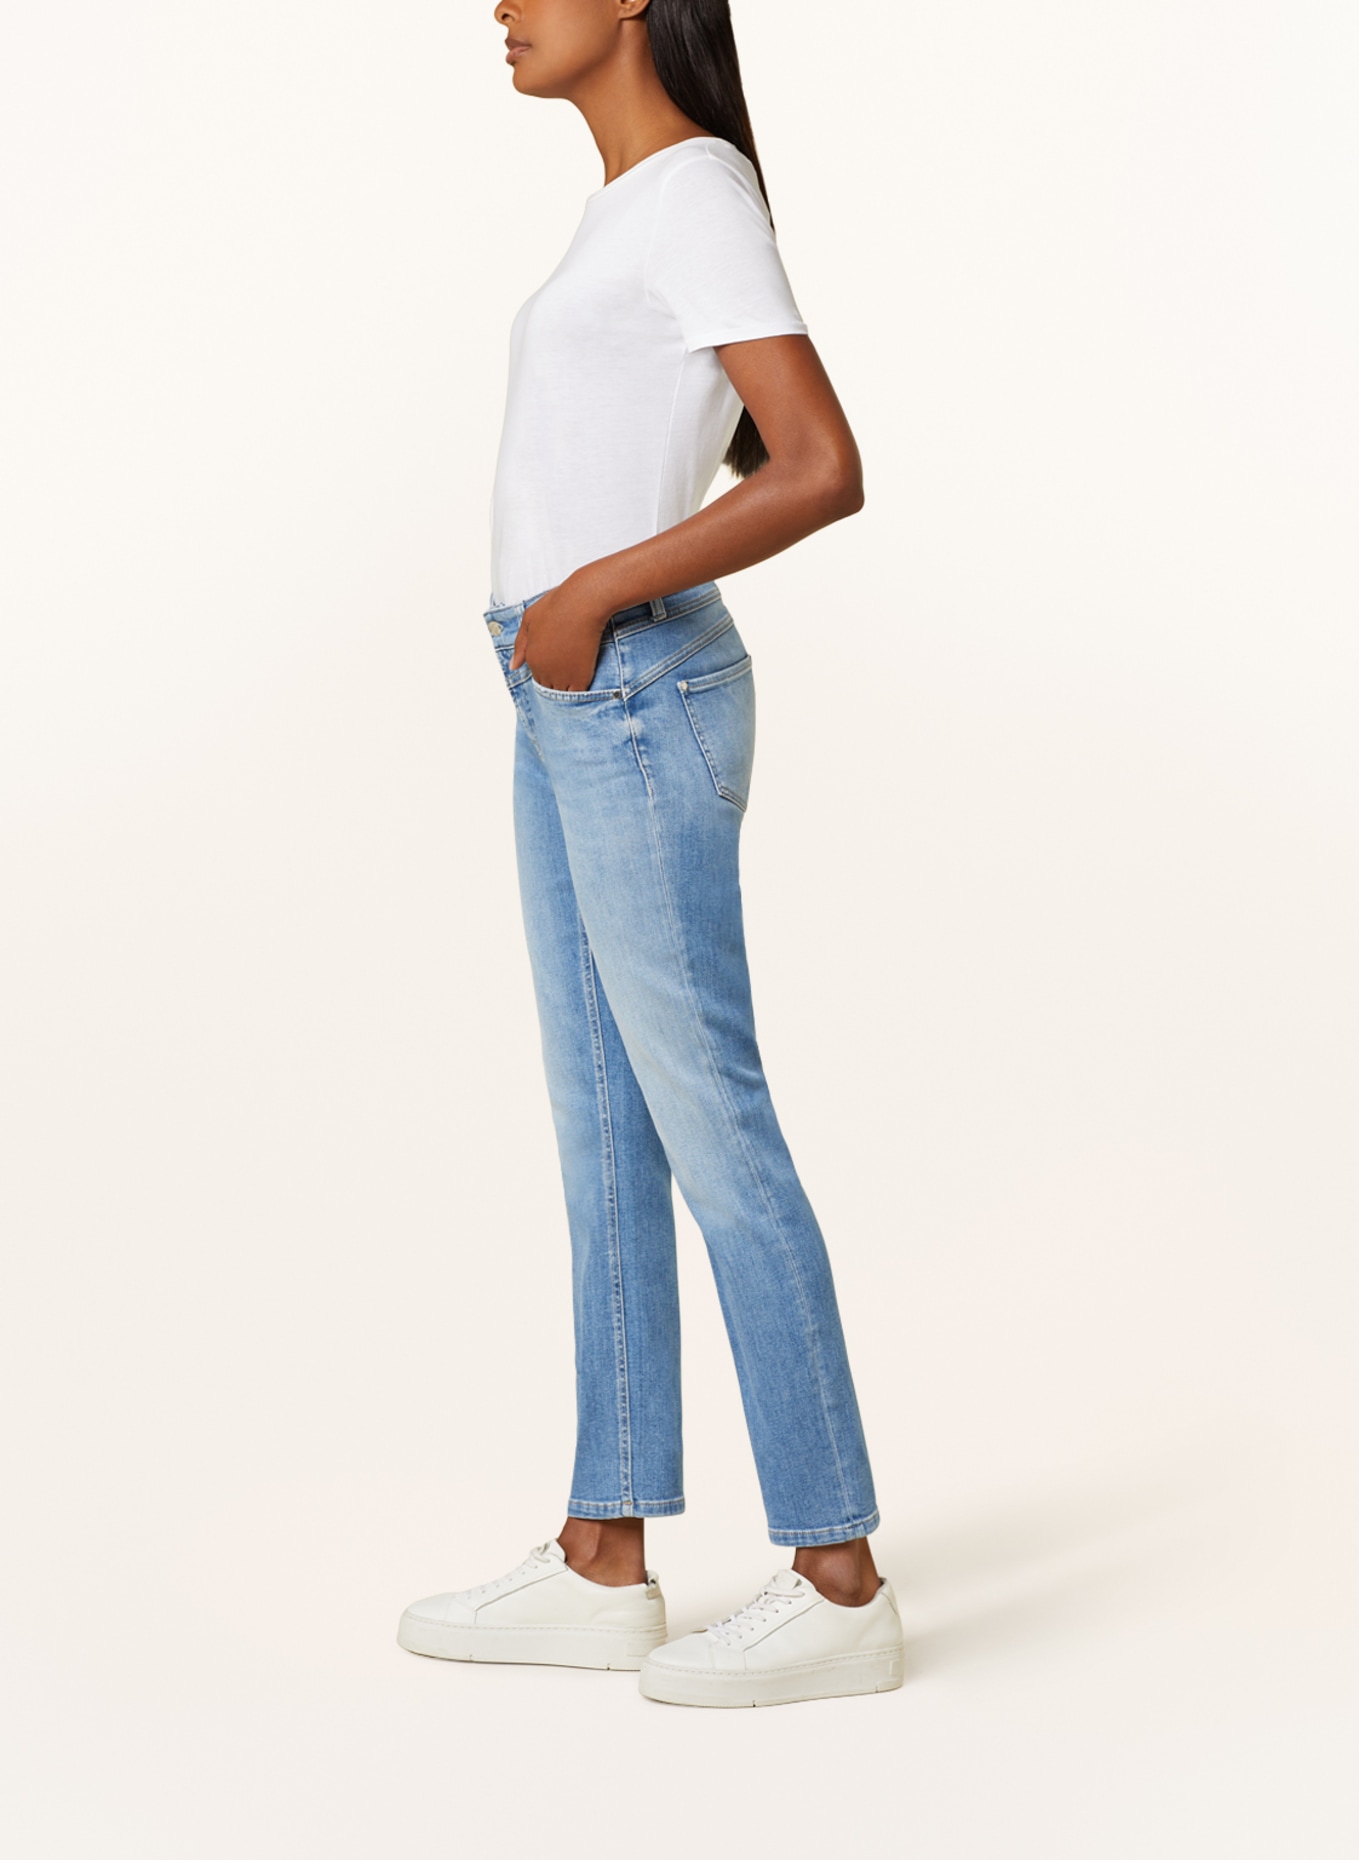 CAMBIO Skinny Jeans PARLA, Farbe: 5215 medium contrast used (Bild 4)